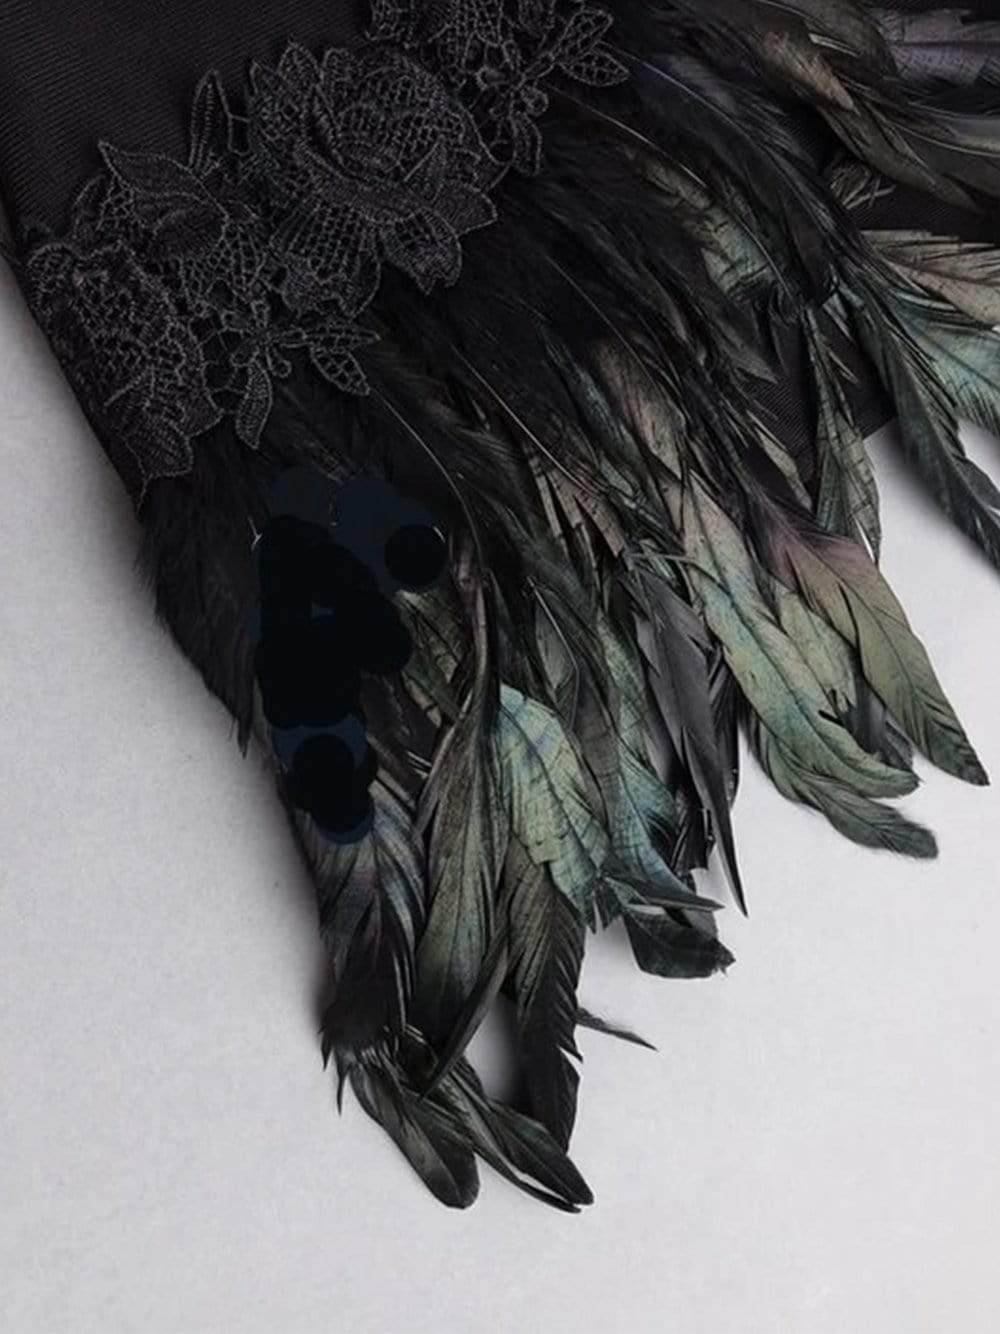 GEMINI Strapless Feathered Dress